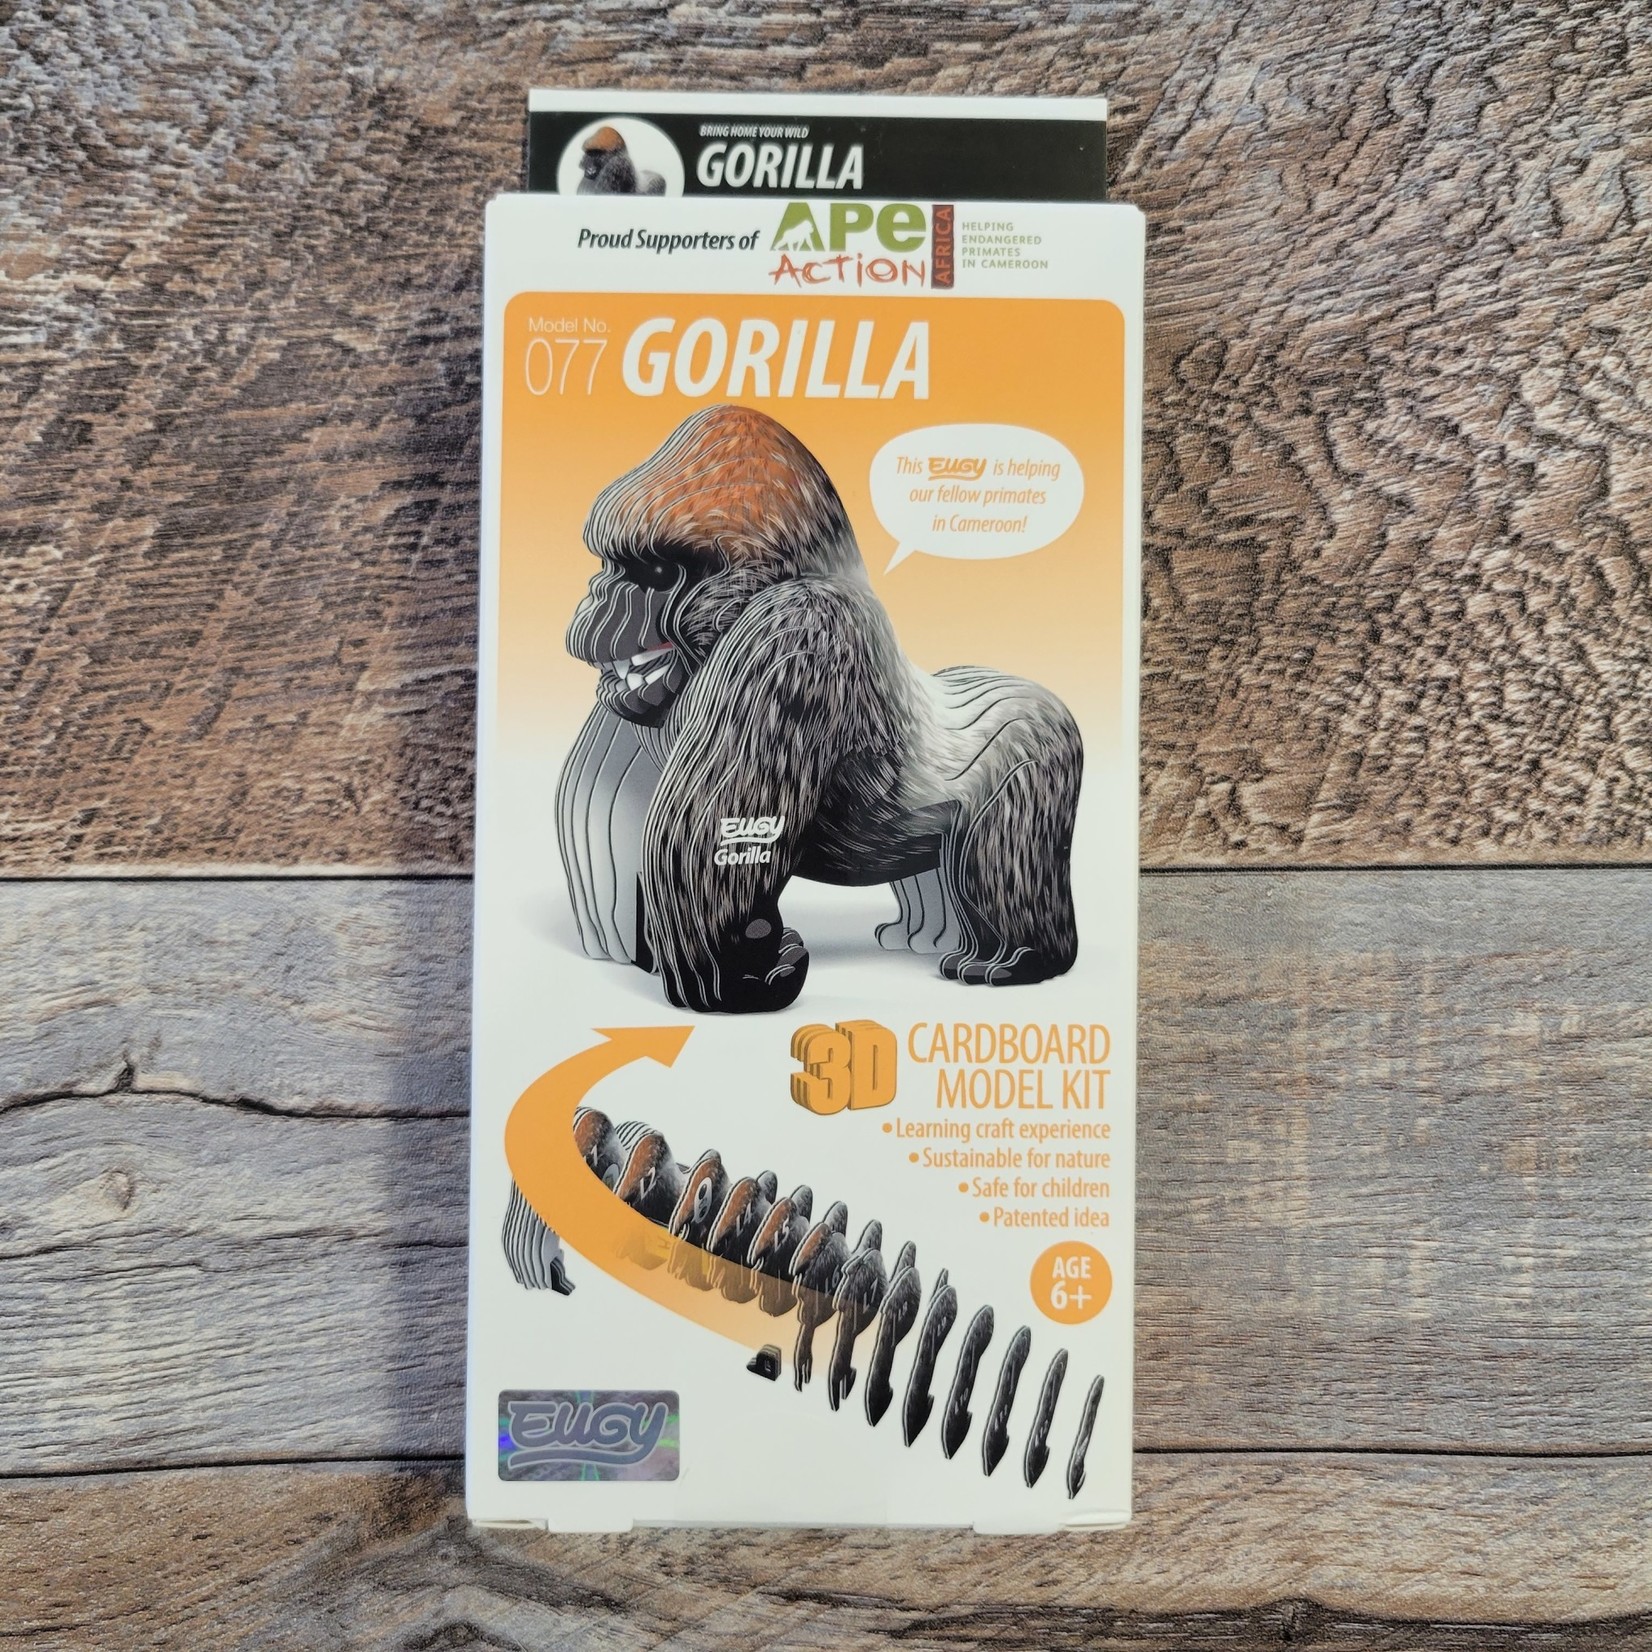 Eugy Cardboard Model Puzzle Kit Gorilla